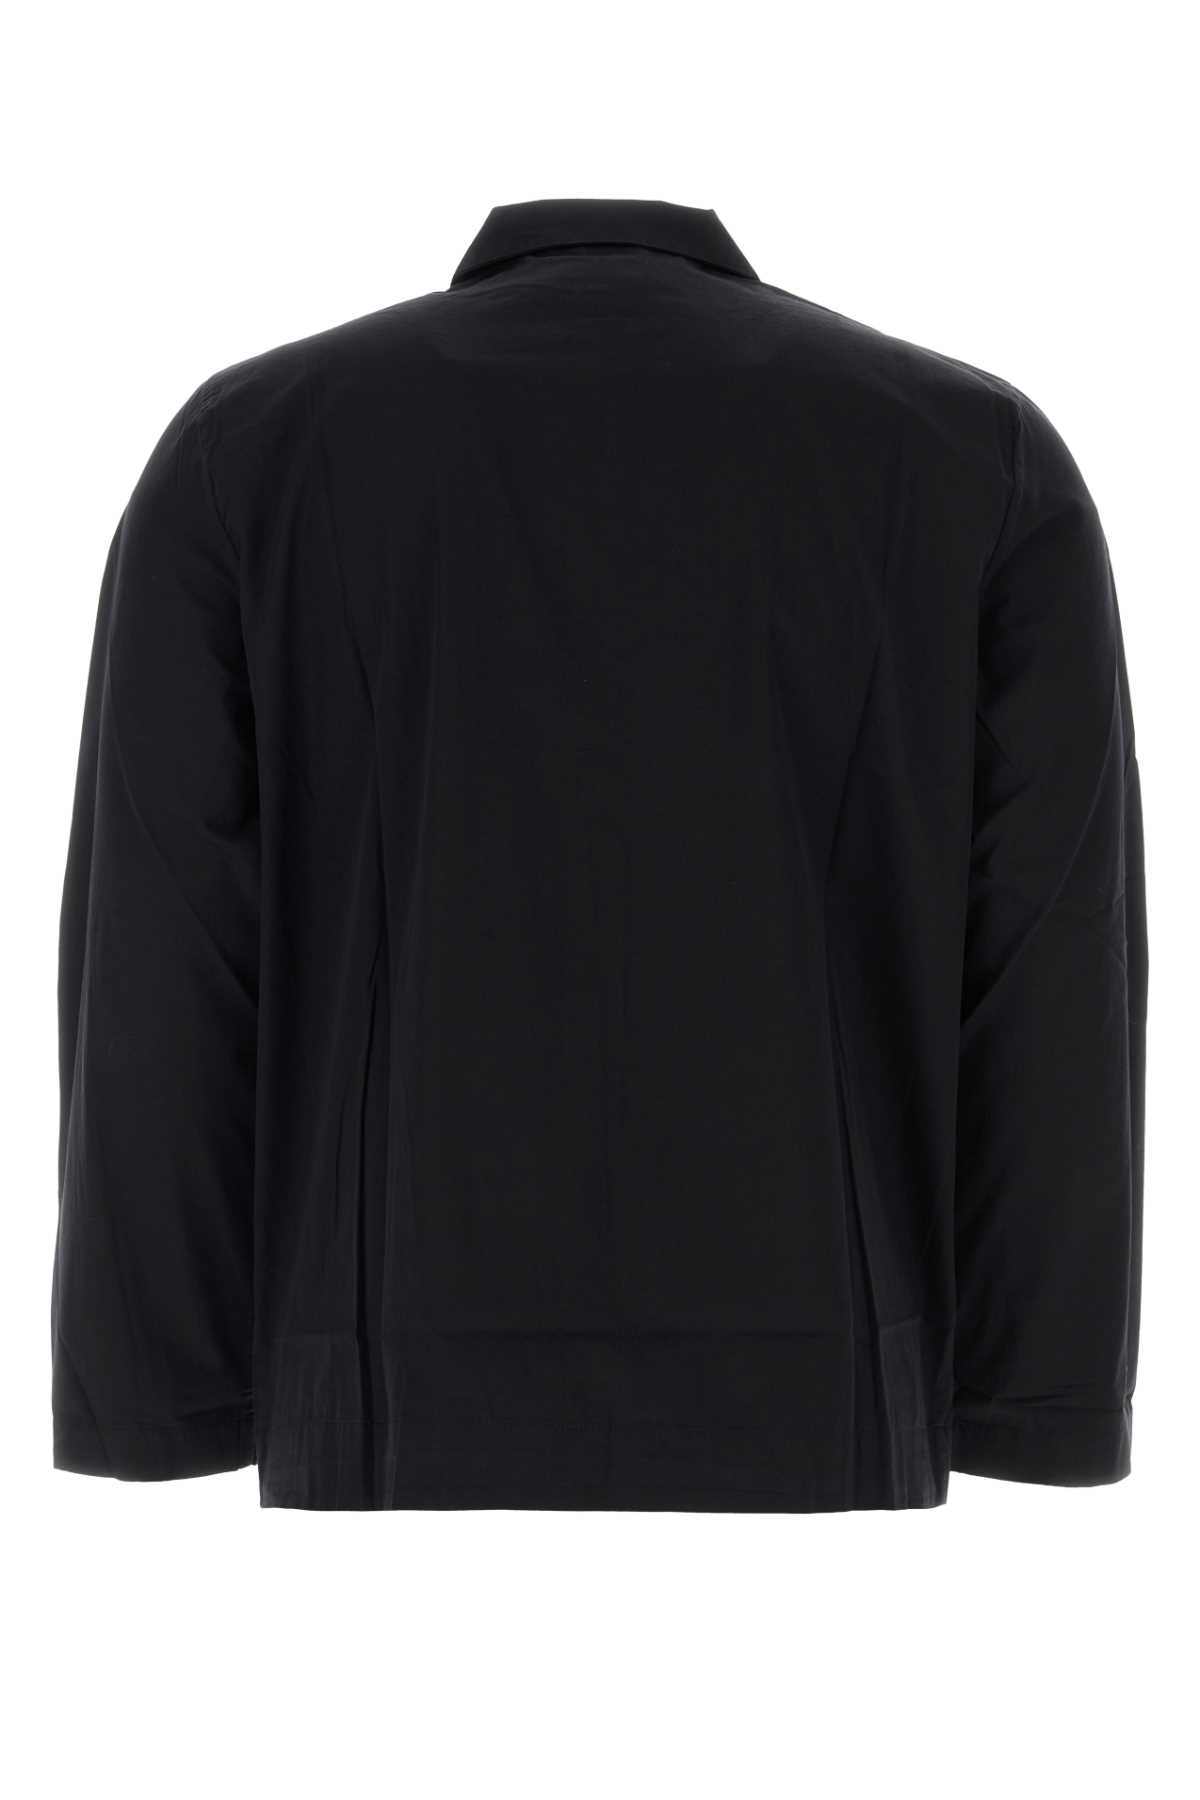 Tekla Black Cotton Pyjama Shirt In Allblack